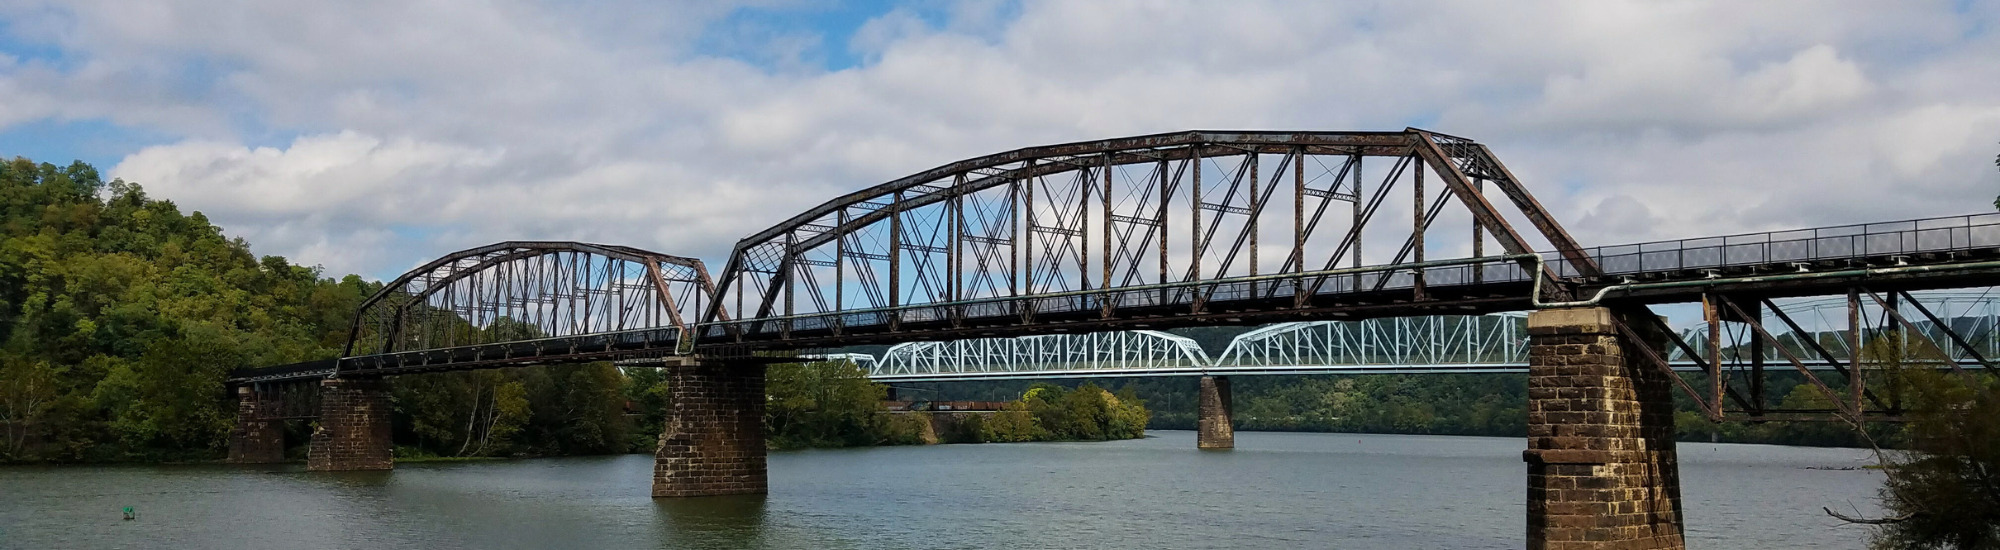 Bridge spanning the river on the GAP